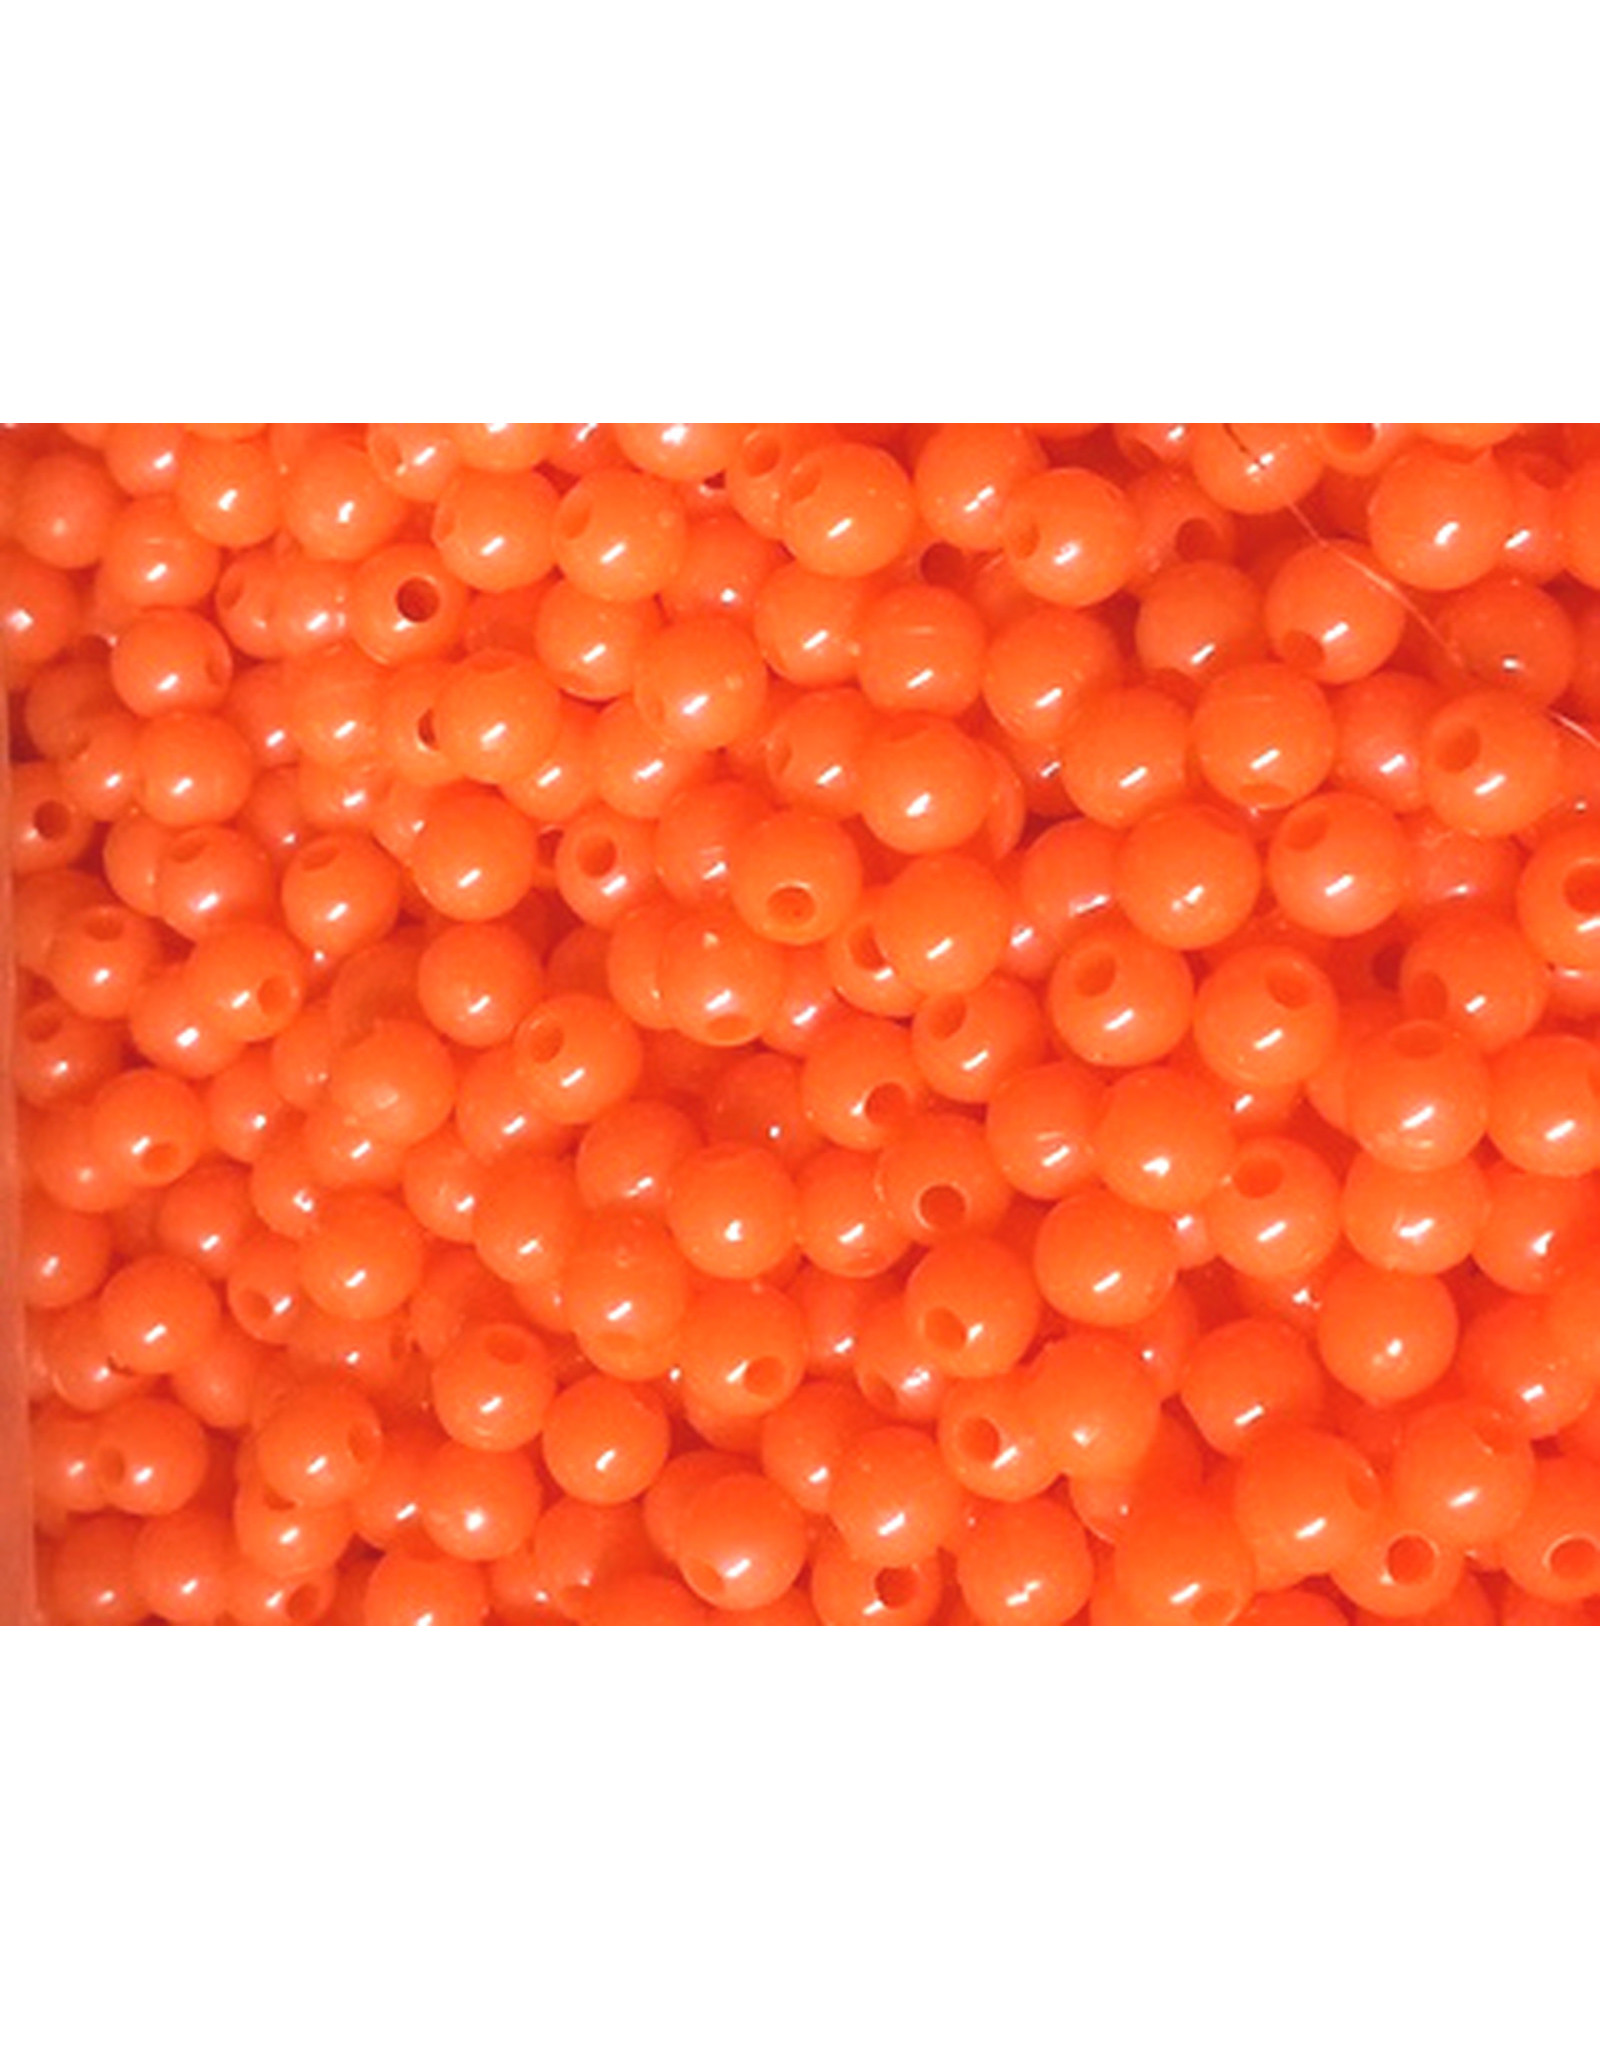 Macks Lure Mack's Lure - Round Bead 8mm Fluorescent Orange - 20 Count